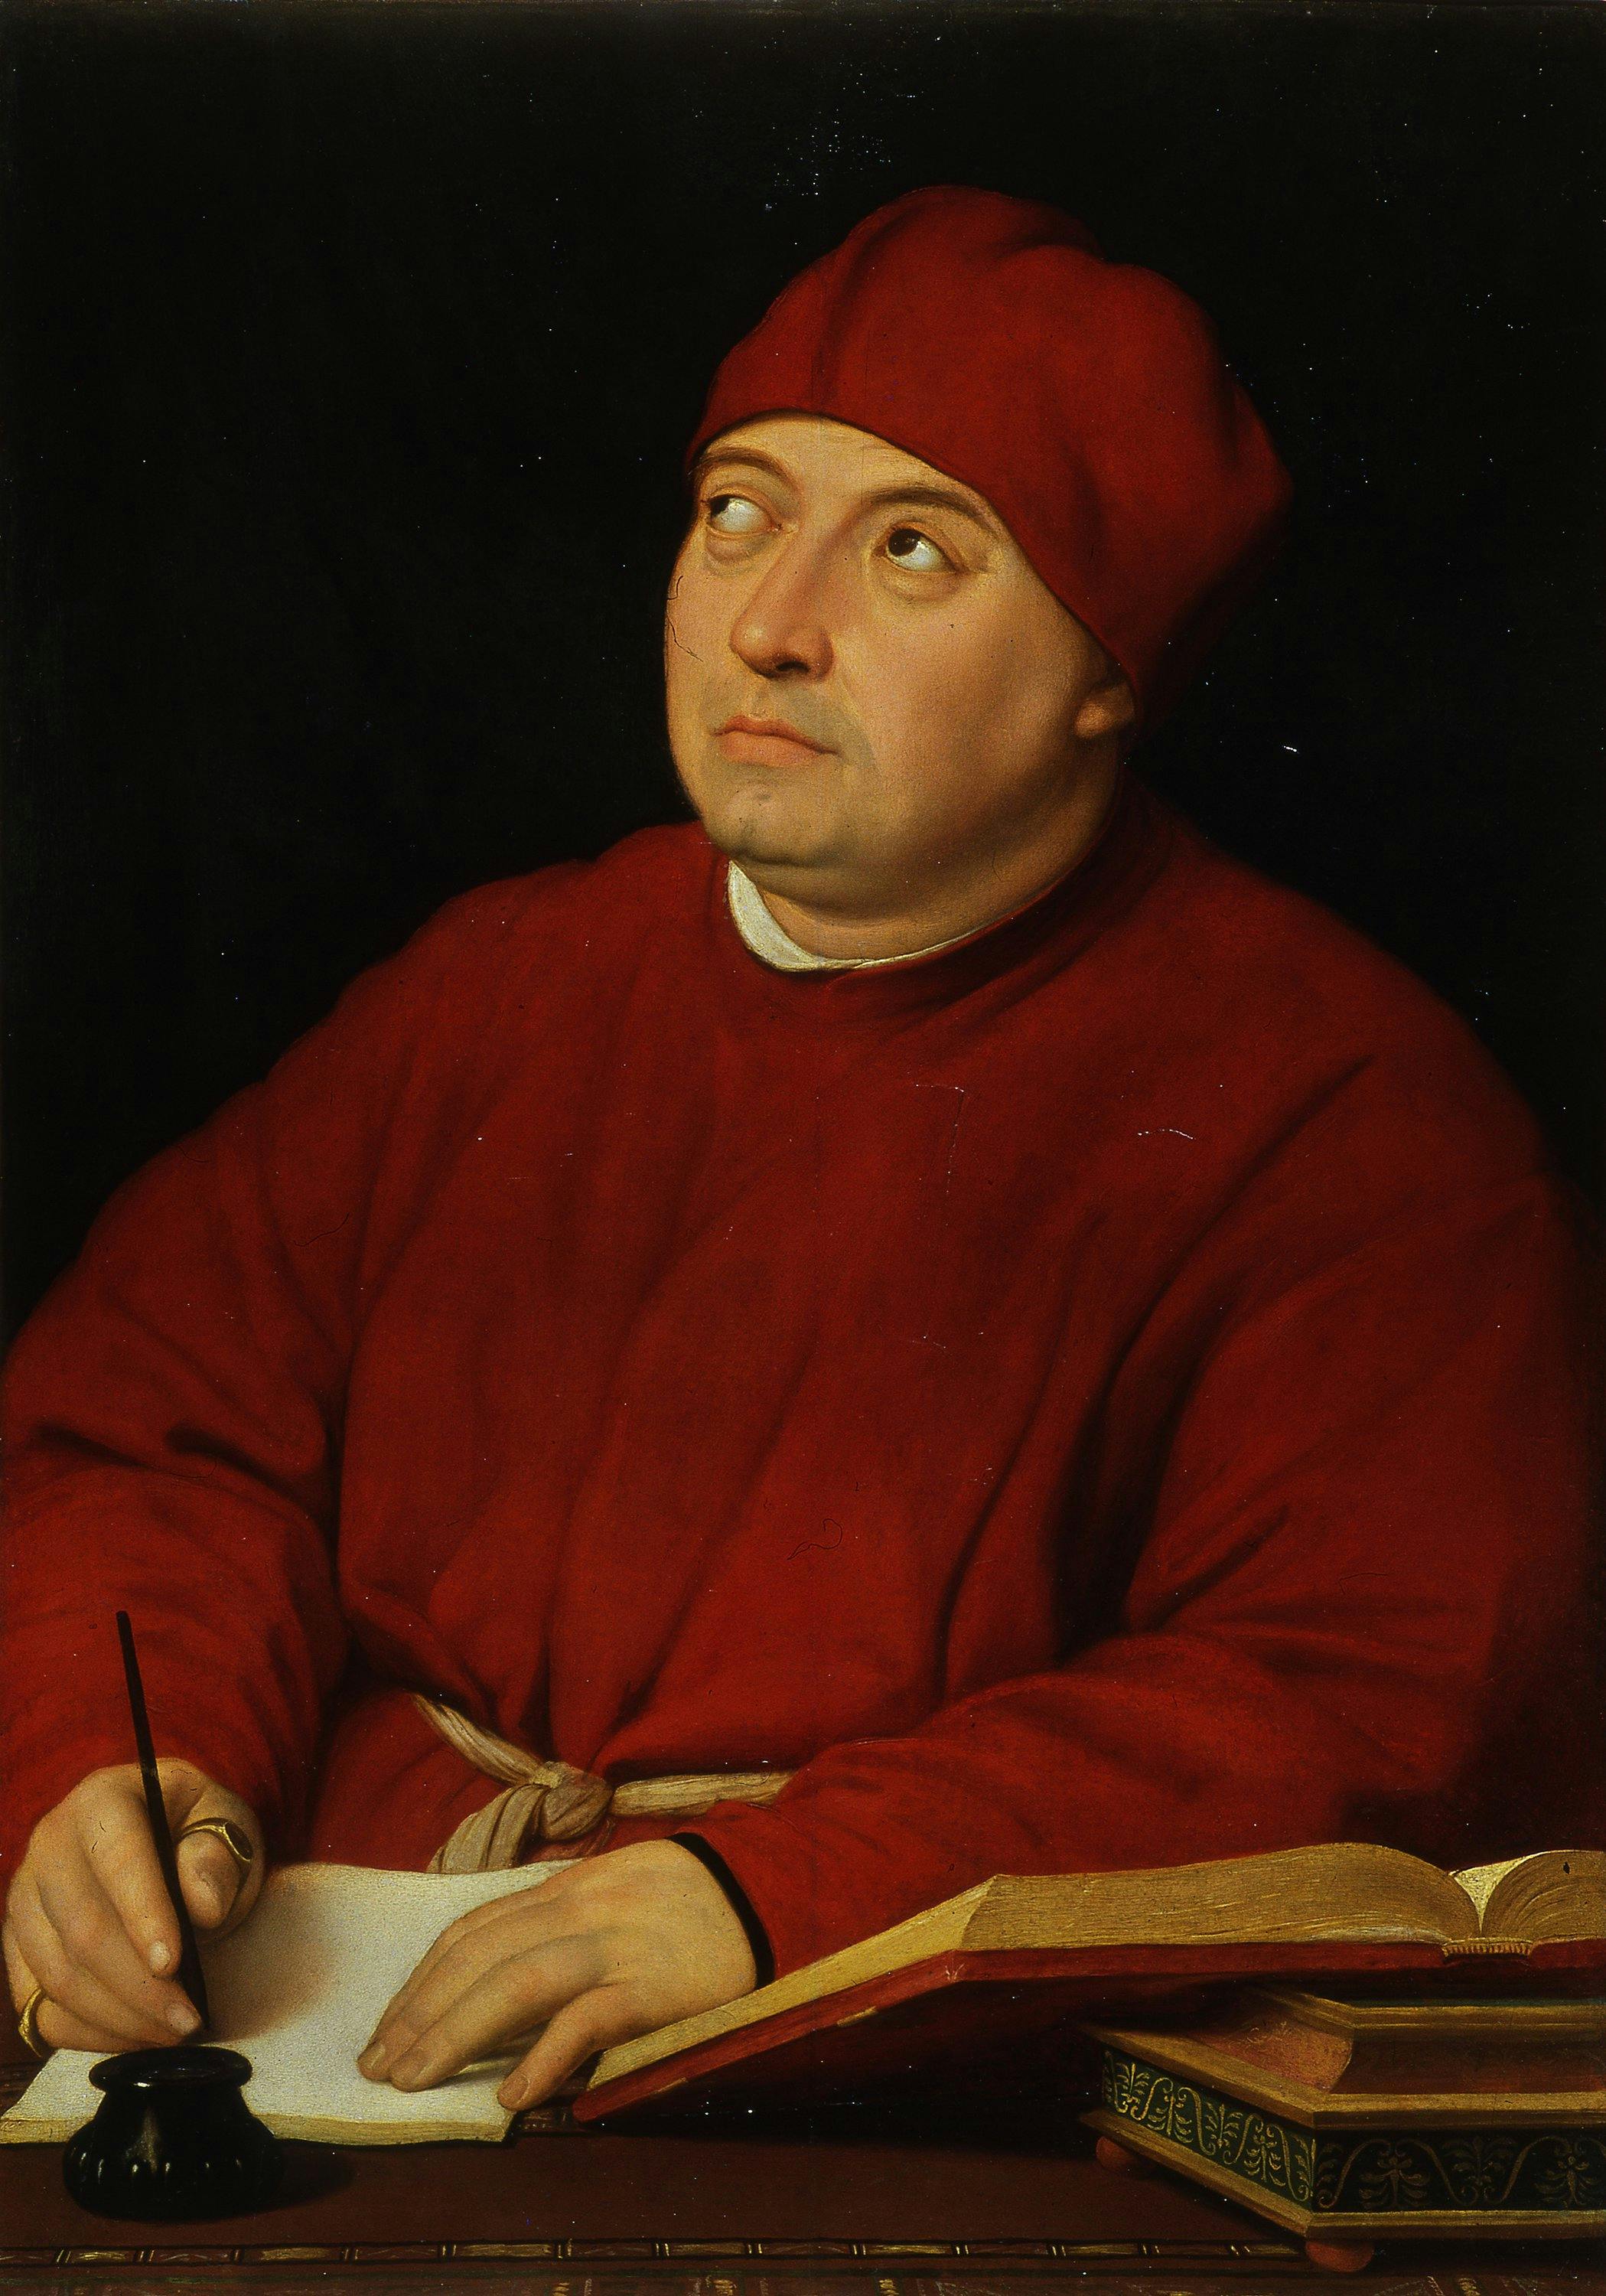 Portrait of Tommaso Inghirami, known as “Phaedra”